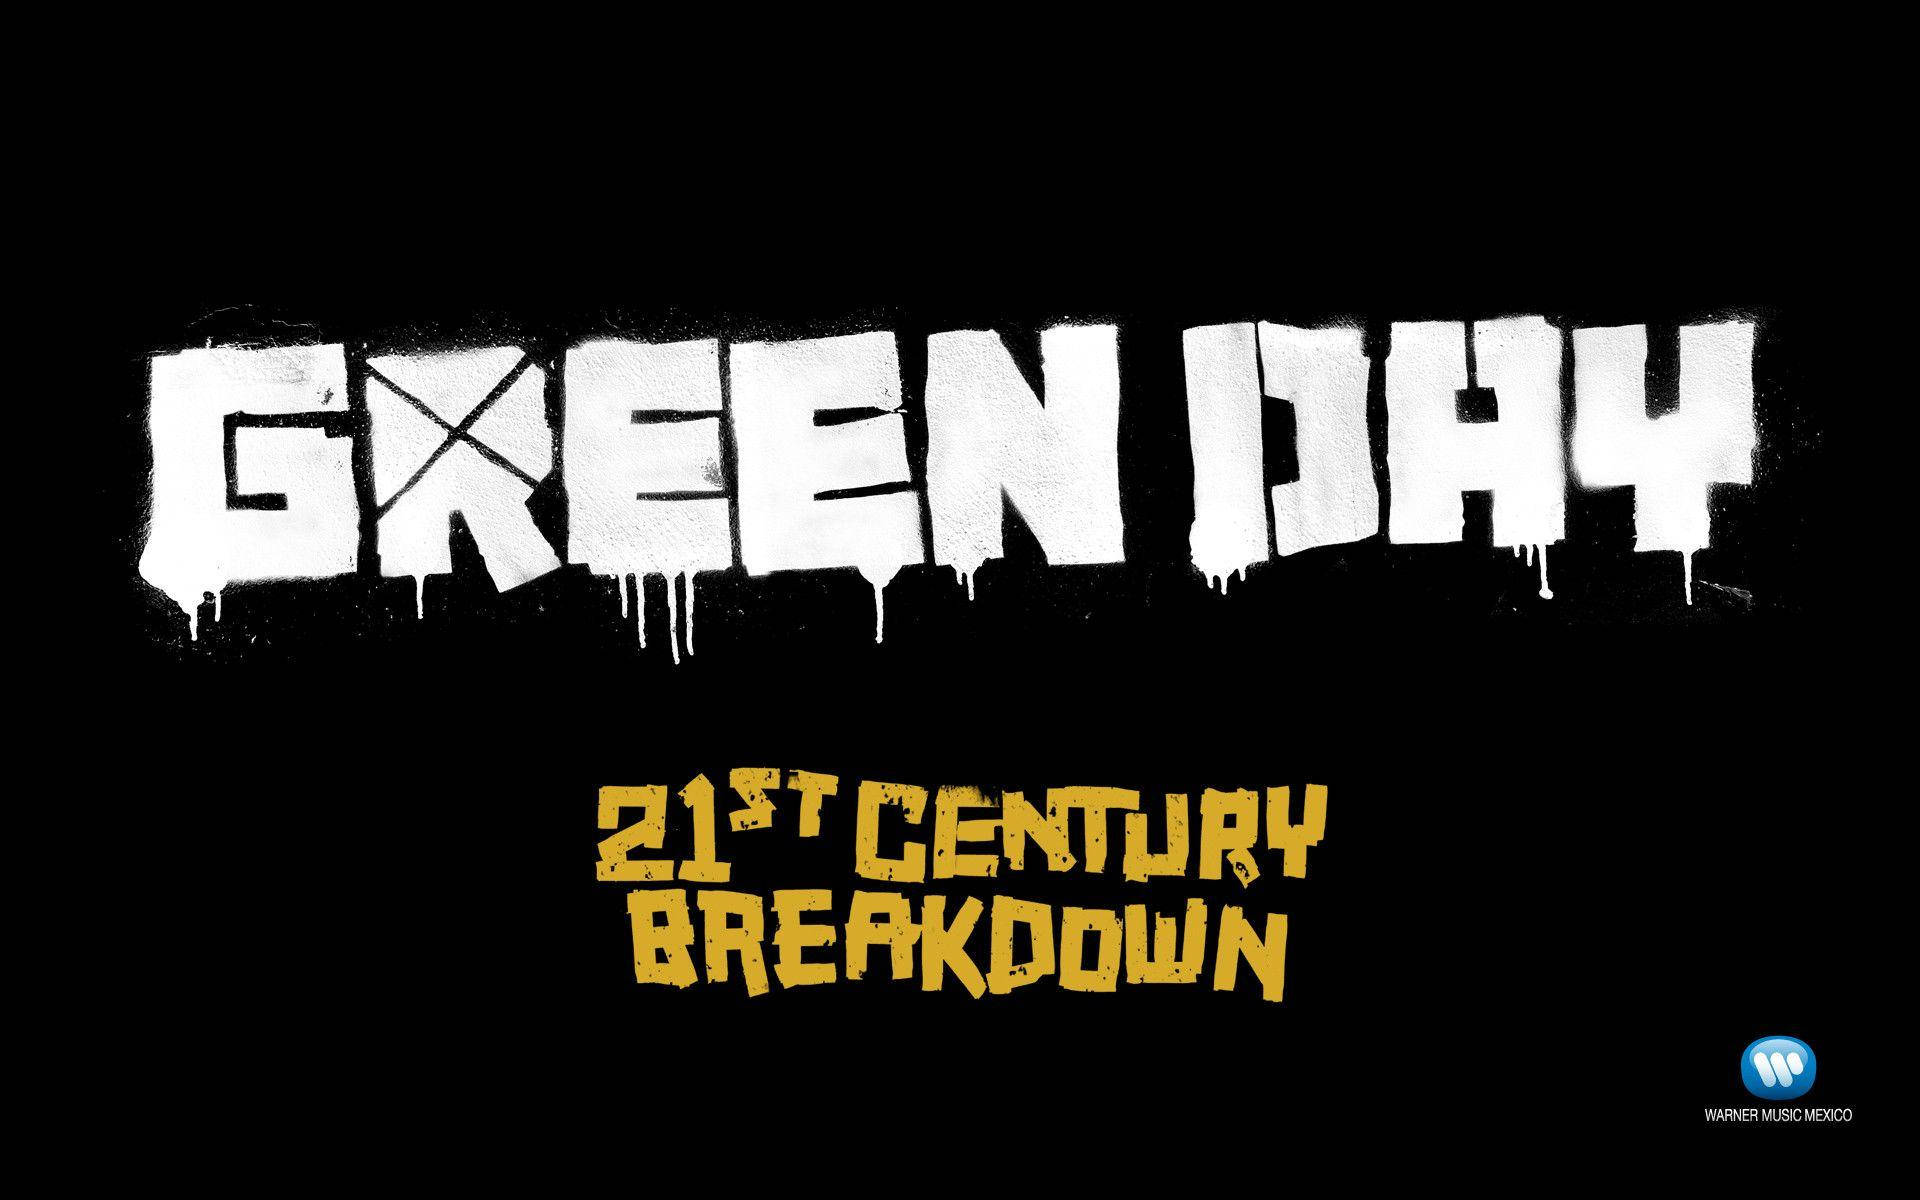 Green Day 21st Century Breakdown Album Wallpaper